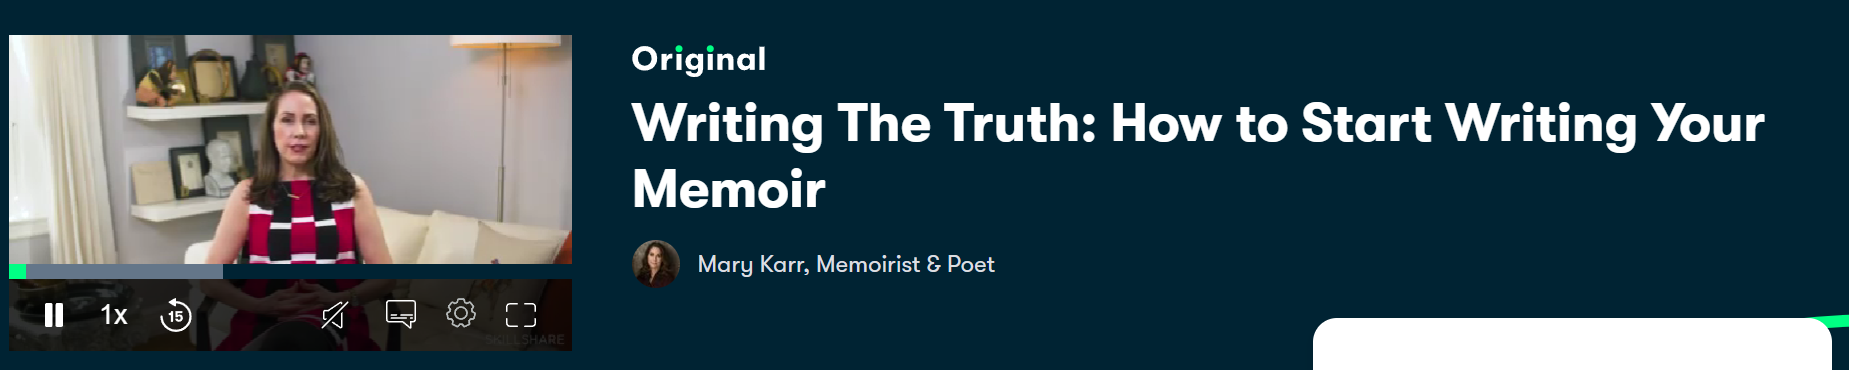 writing-the-truth-memoir.png